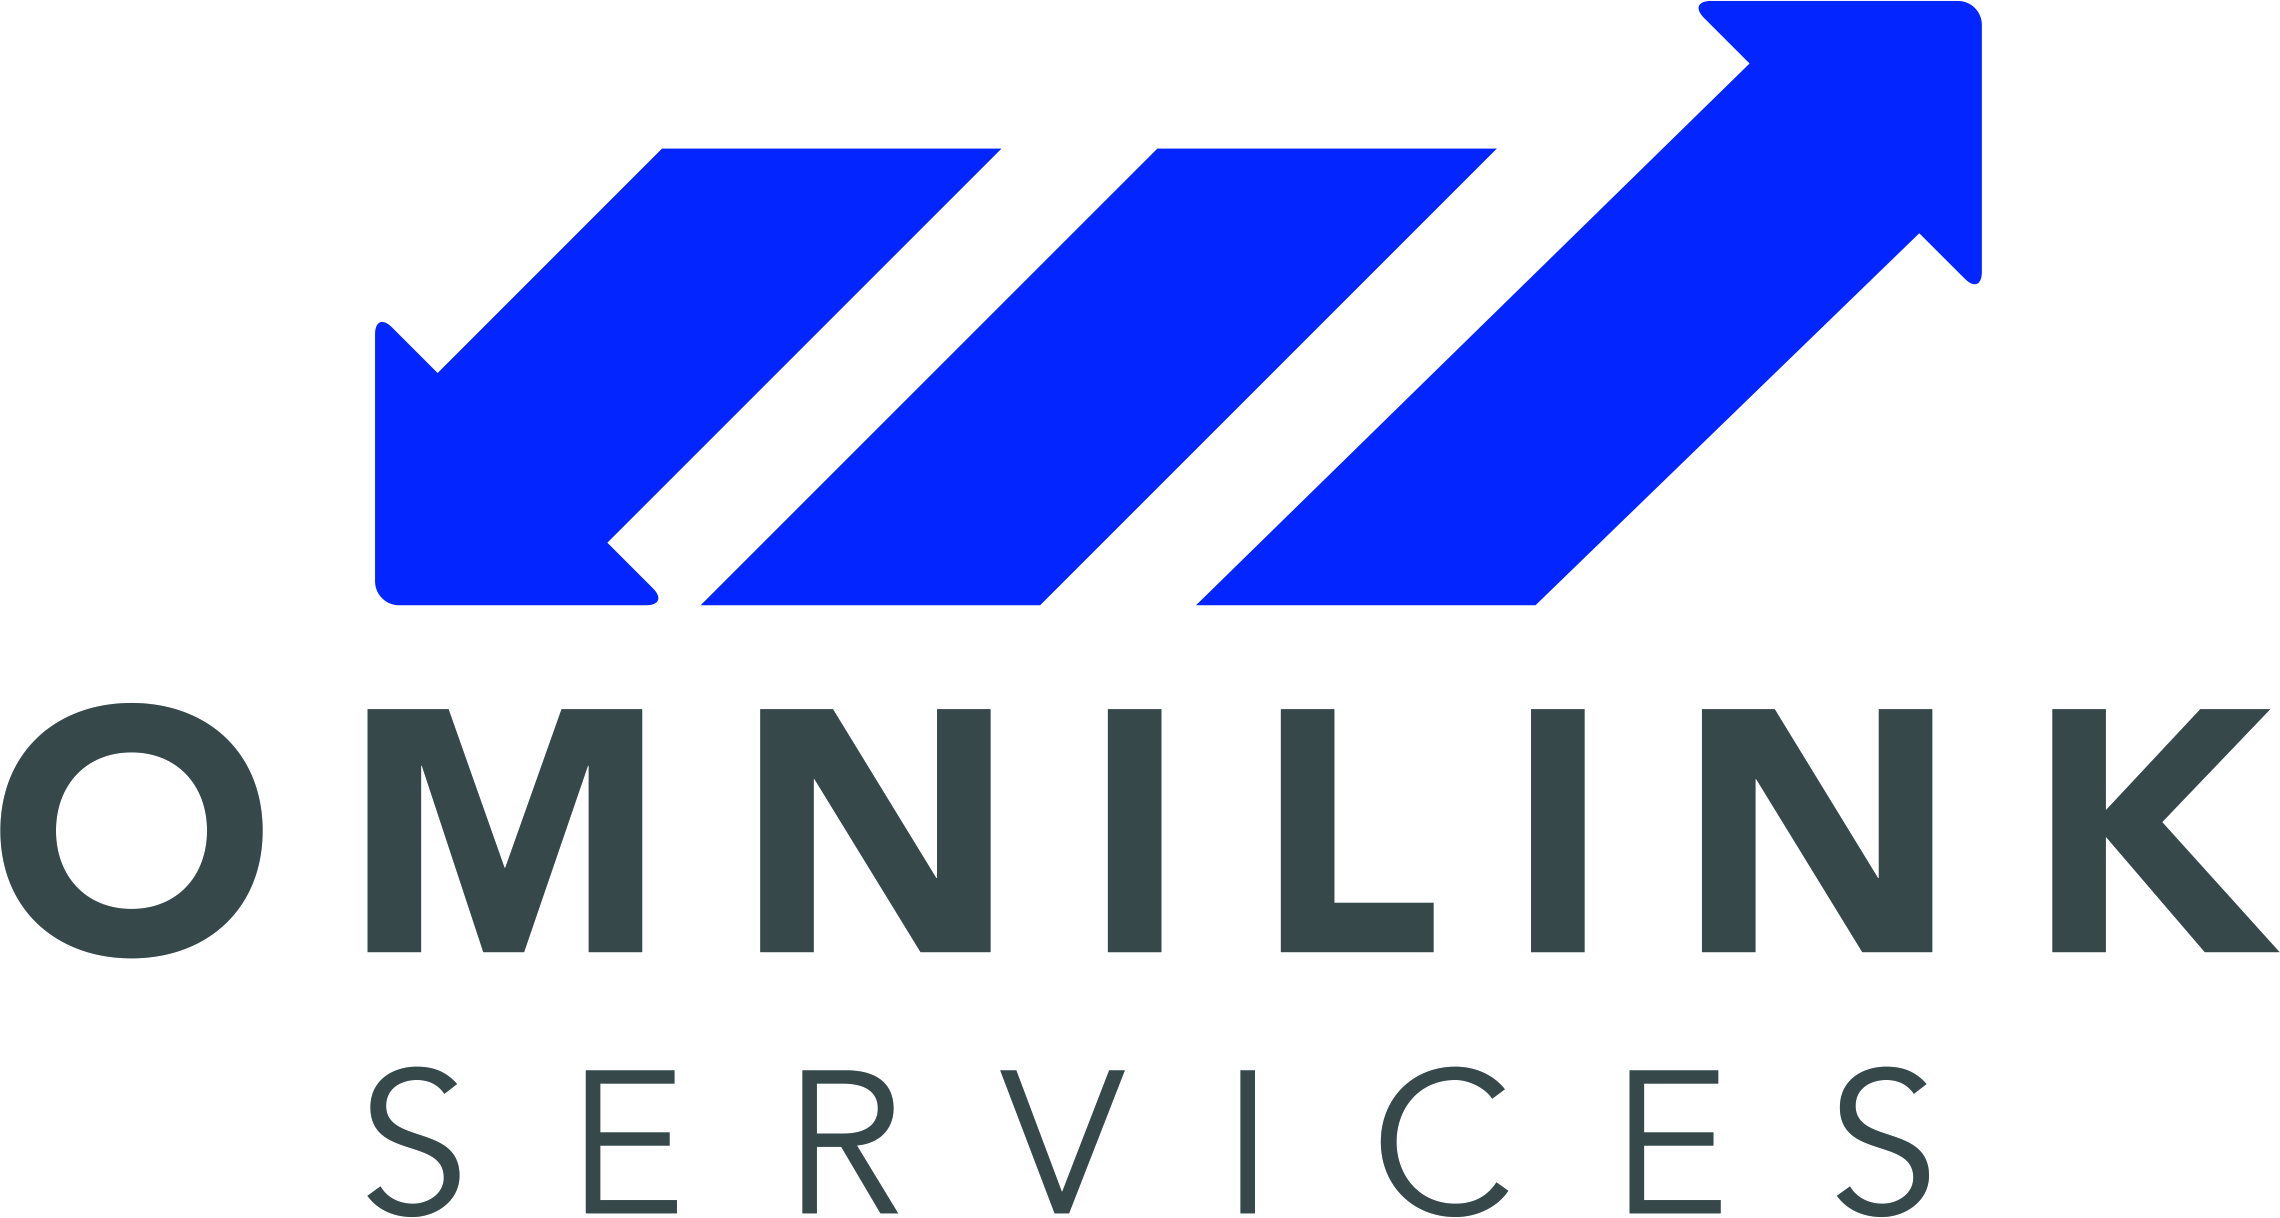 Omnilik Services